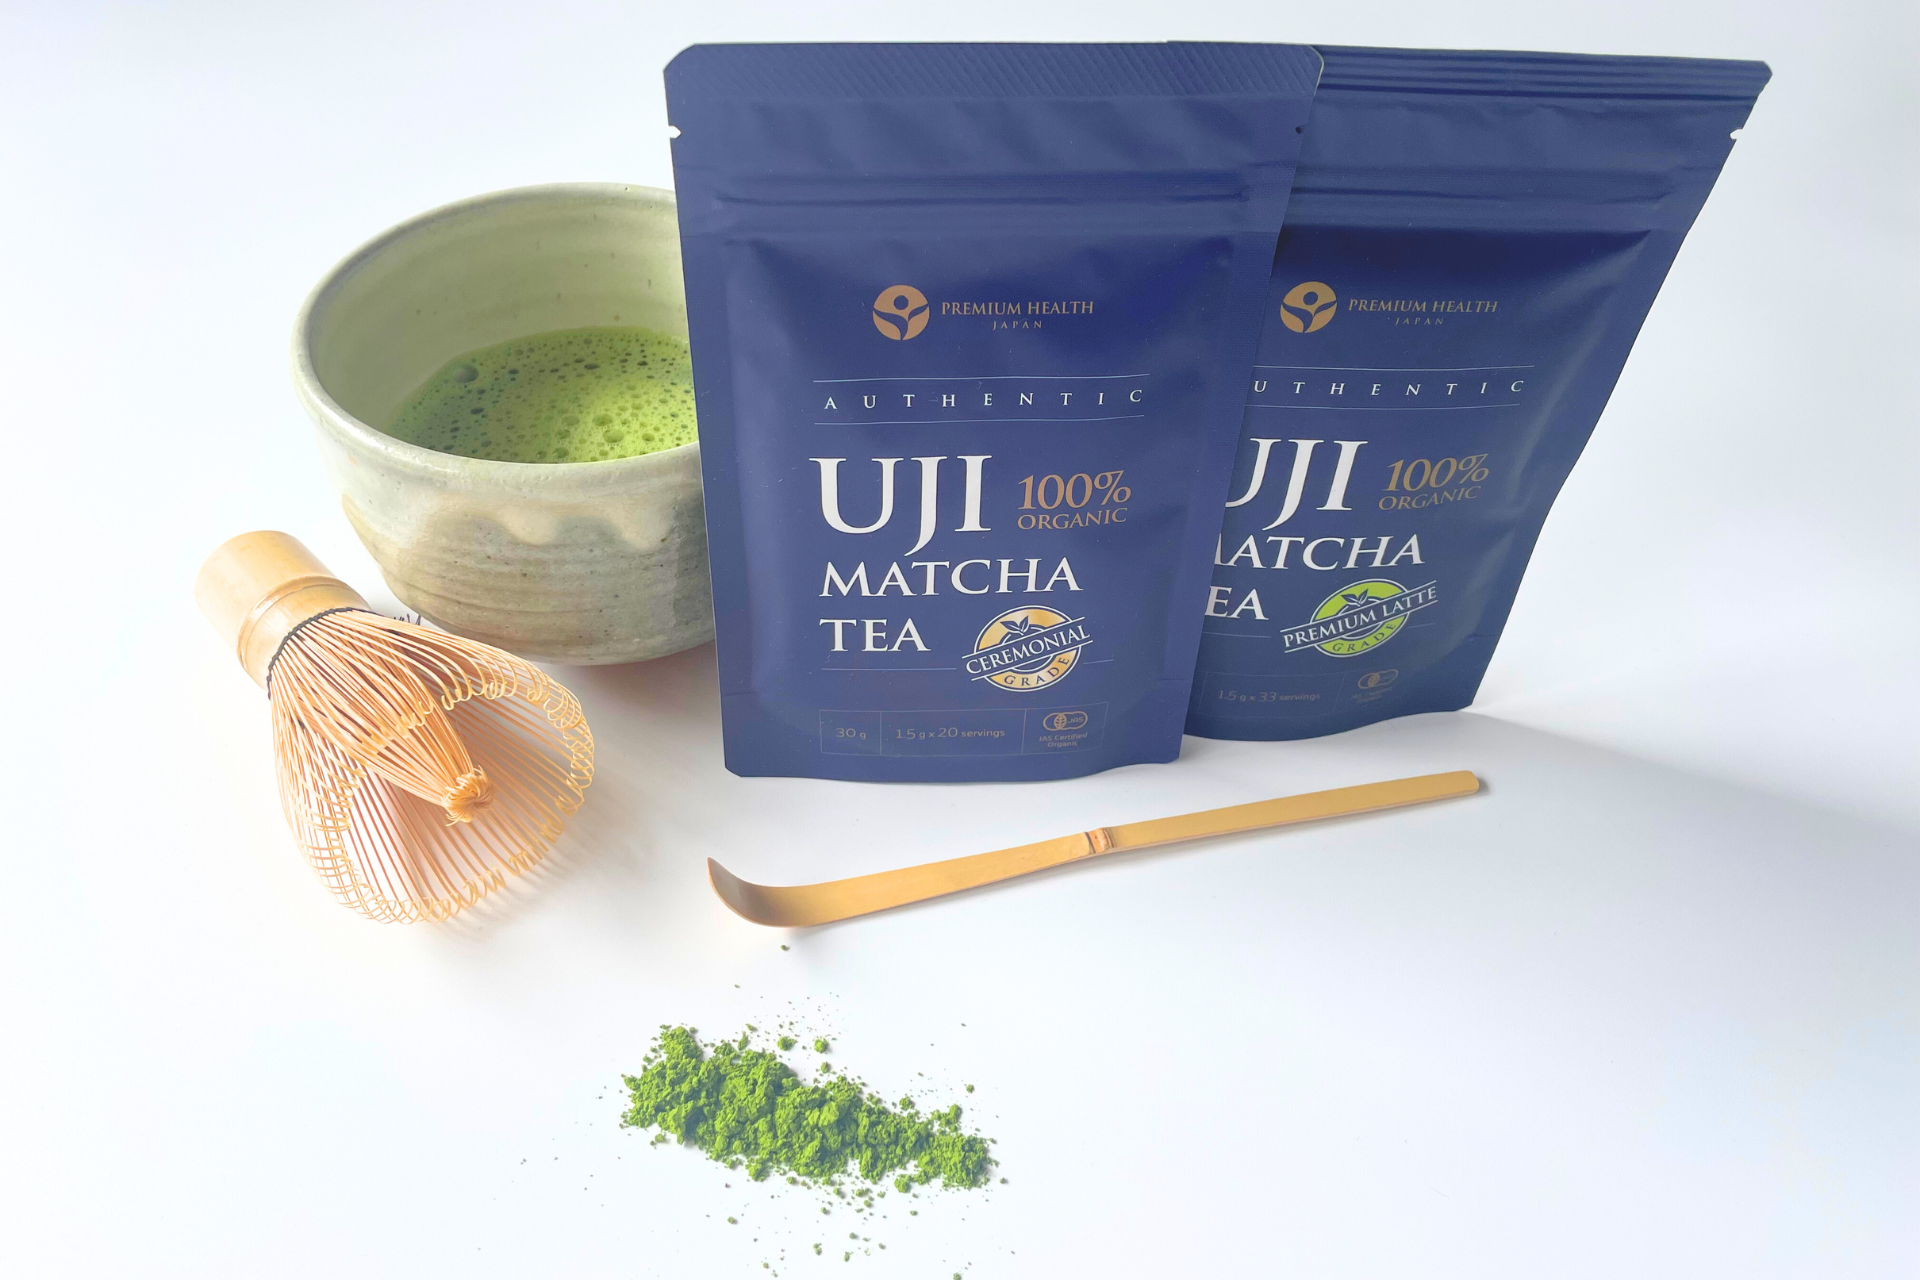 Product display with organic Uji matcha, matcha tea in a chawan bowl, bamboo matcha whisk and a chashaku scoop